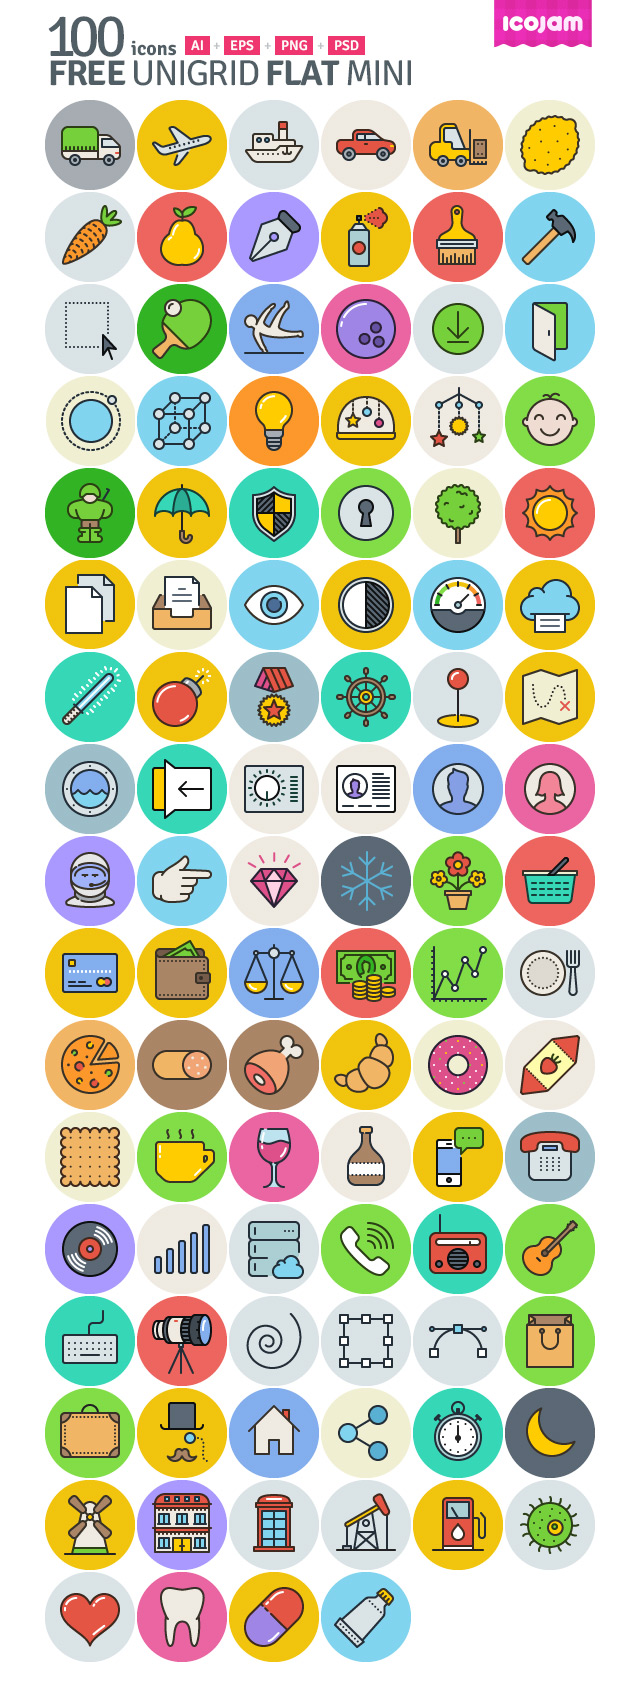 Unigrid 100 Free Flat Icons Freebiesbug